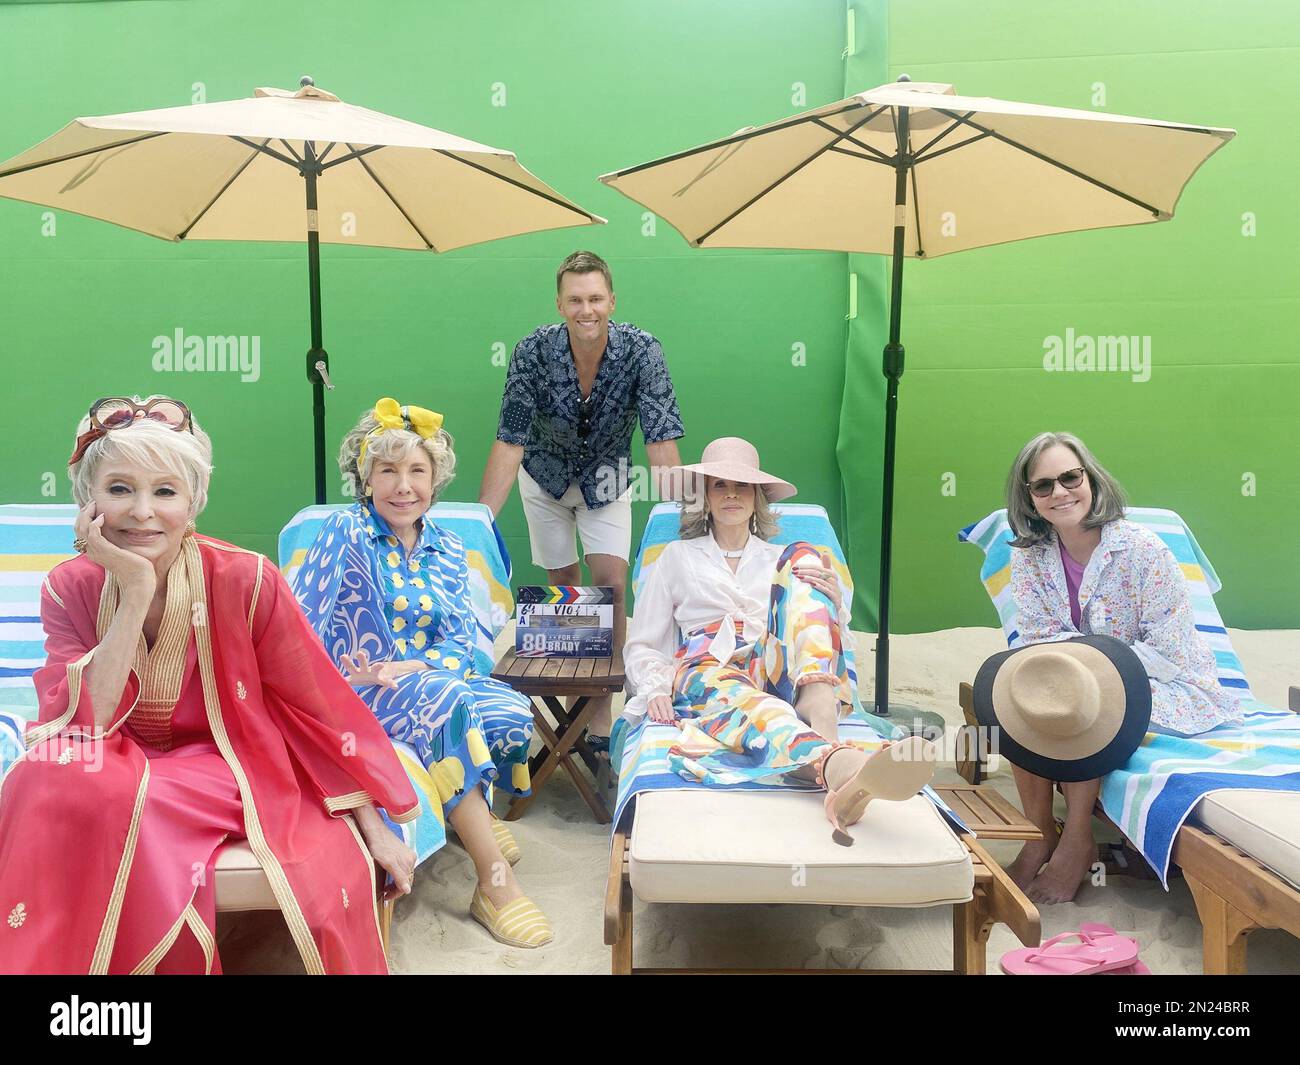 80 for Brady' Cast: How Old Are Rita Moreno, Jane Fonda, Lily Tomlin, and  Sally Field?